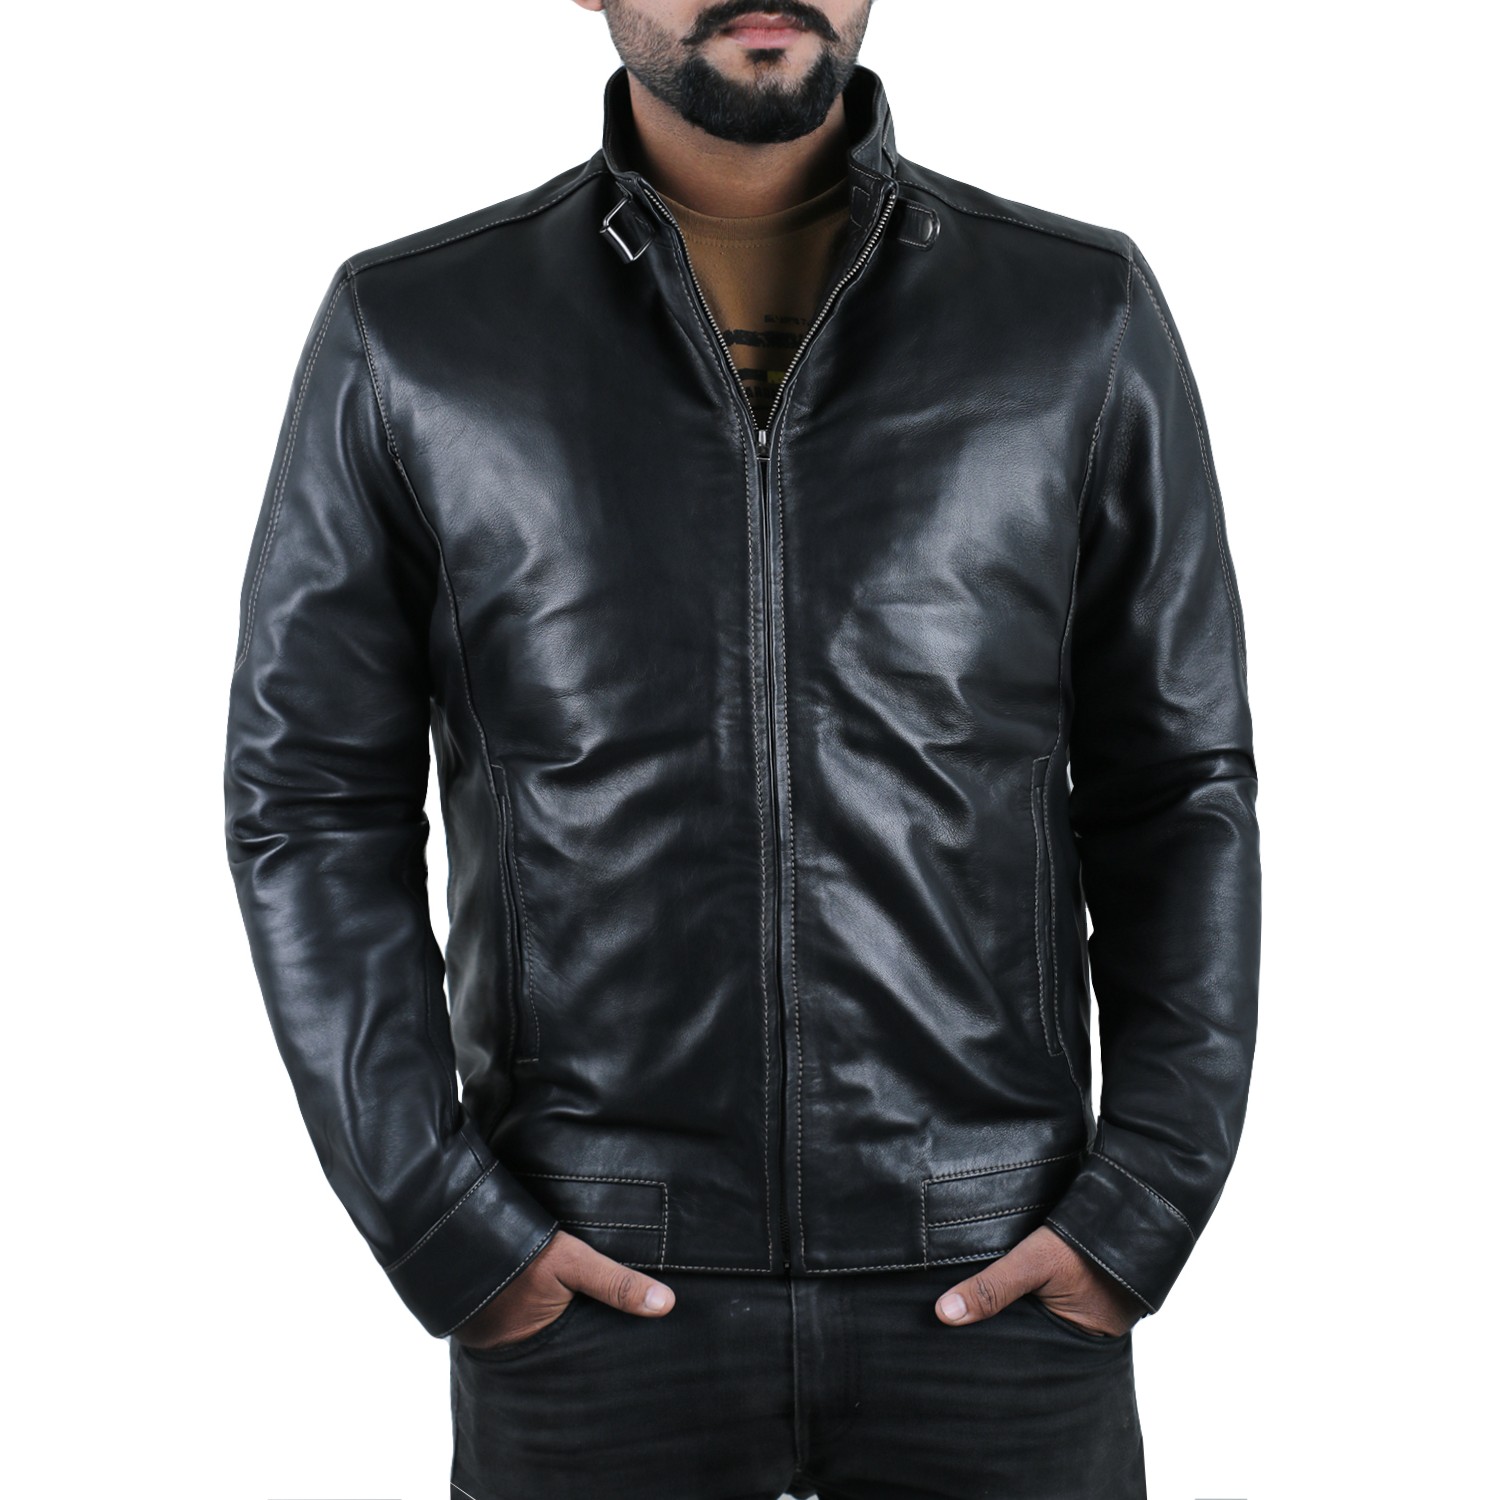 1501637 Black, Classic Jacket Laverapelle Mens Genuine Lambskin Leather Jacket